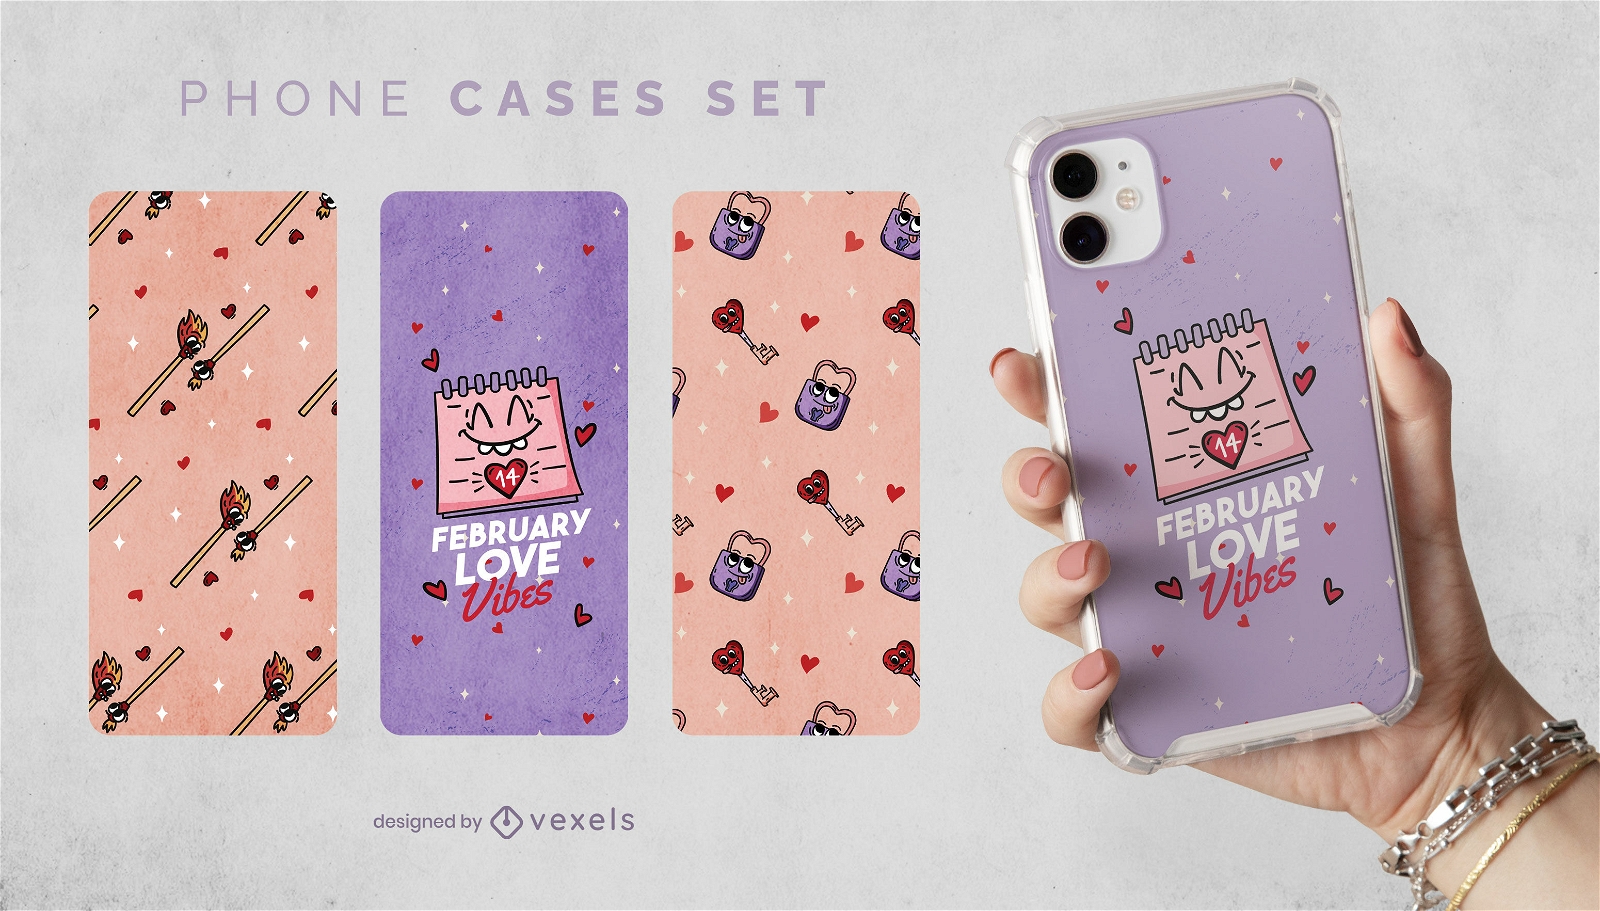 February love vibes phone cases design